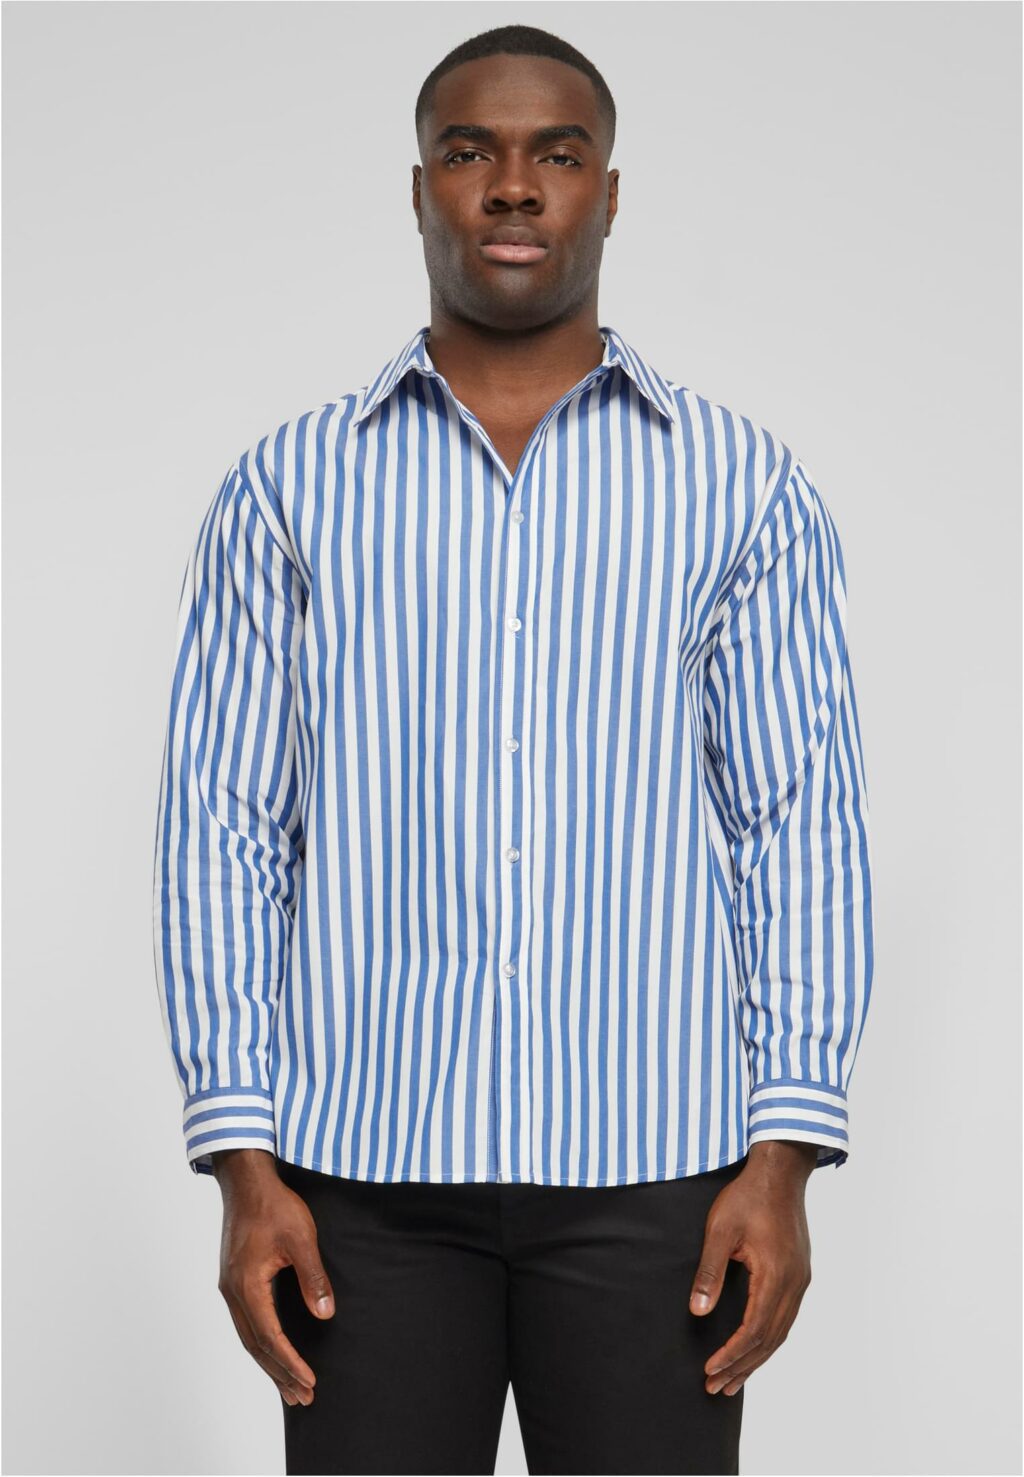 Urban Classics Striped Summer Shirt white/blue TB6659